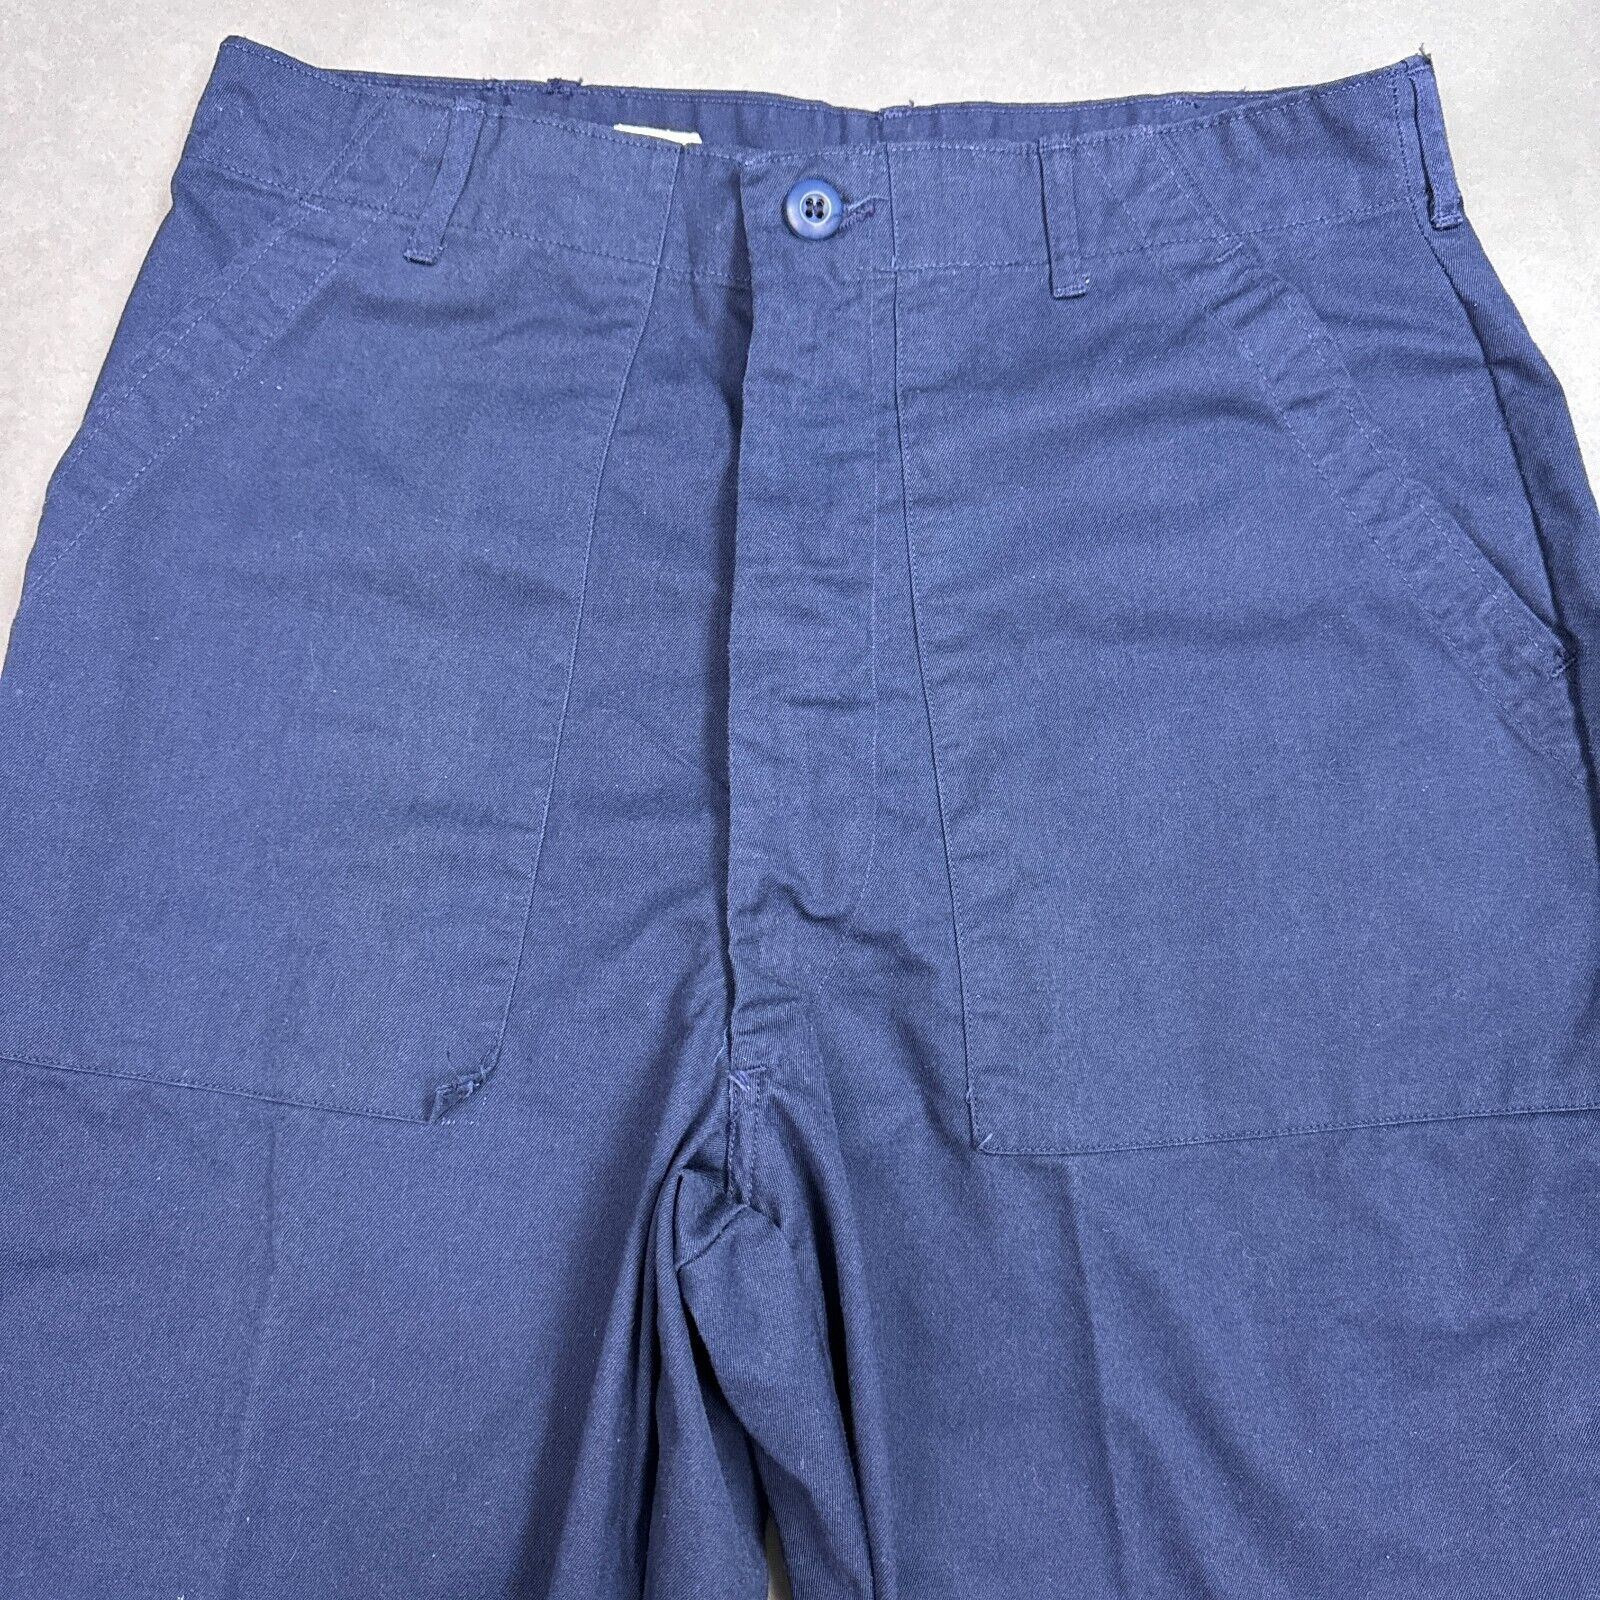 US Military Pants Mens 34x33 Blue Trouser Cargo Vietnam War Air Force Shade 1549